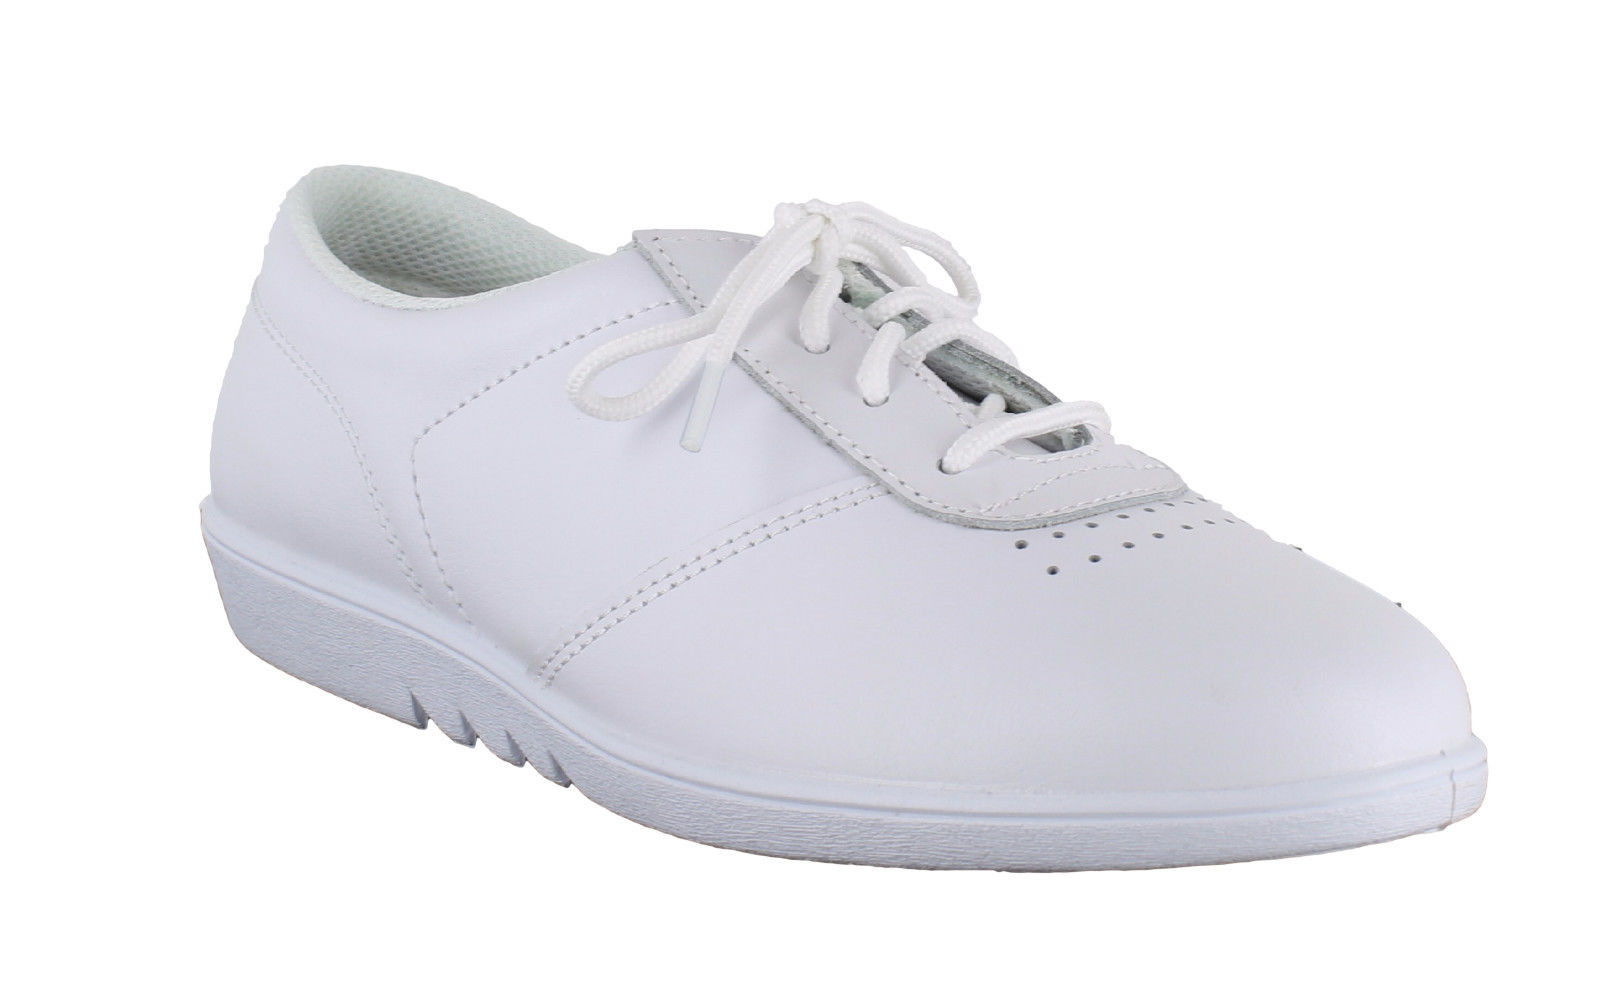 Womens FreeStep Treble Leather Comfort Lace Up Washable Shoes Sizes 3 to 9 | eBay